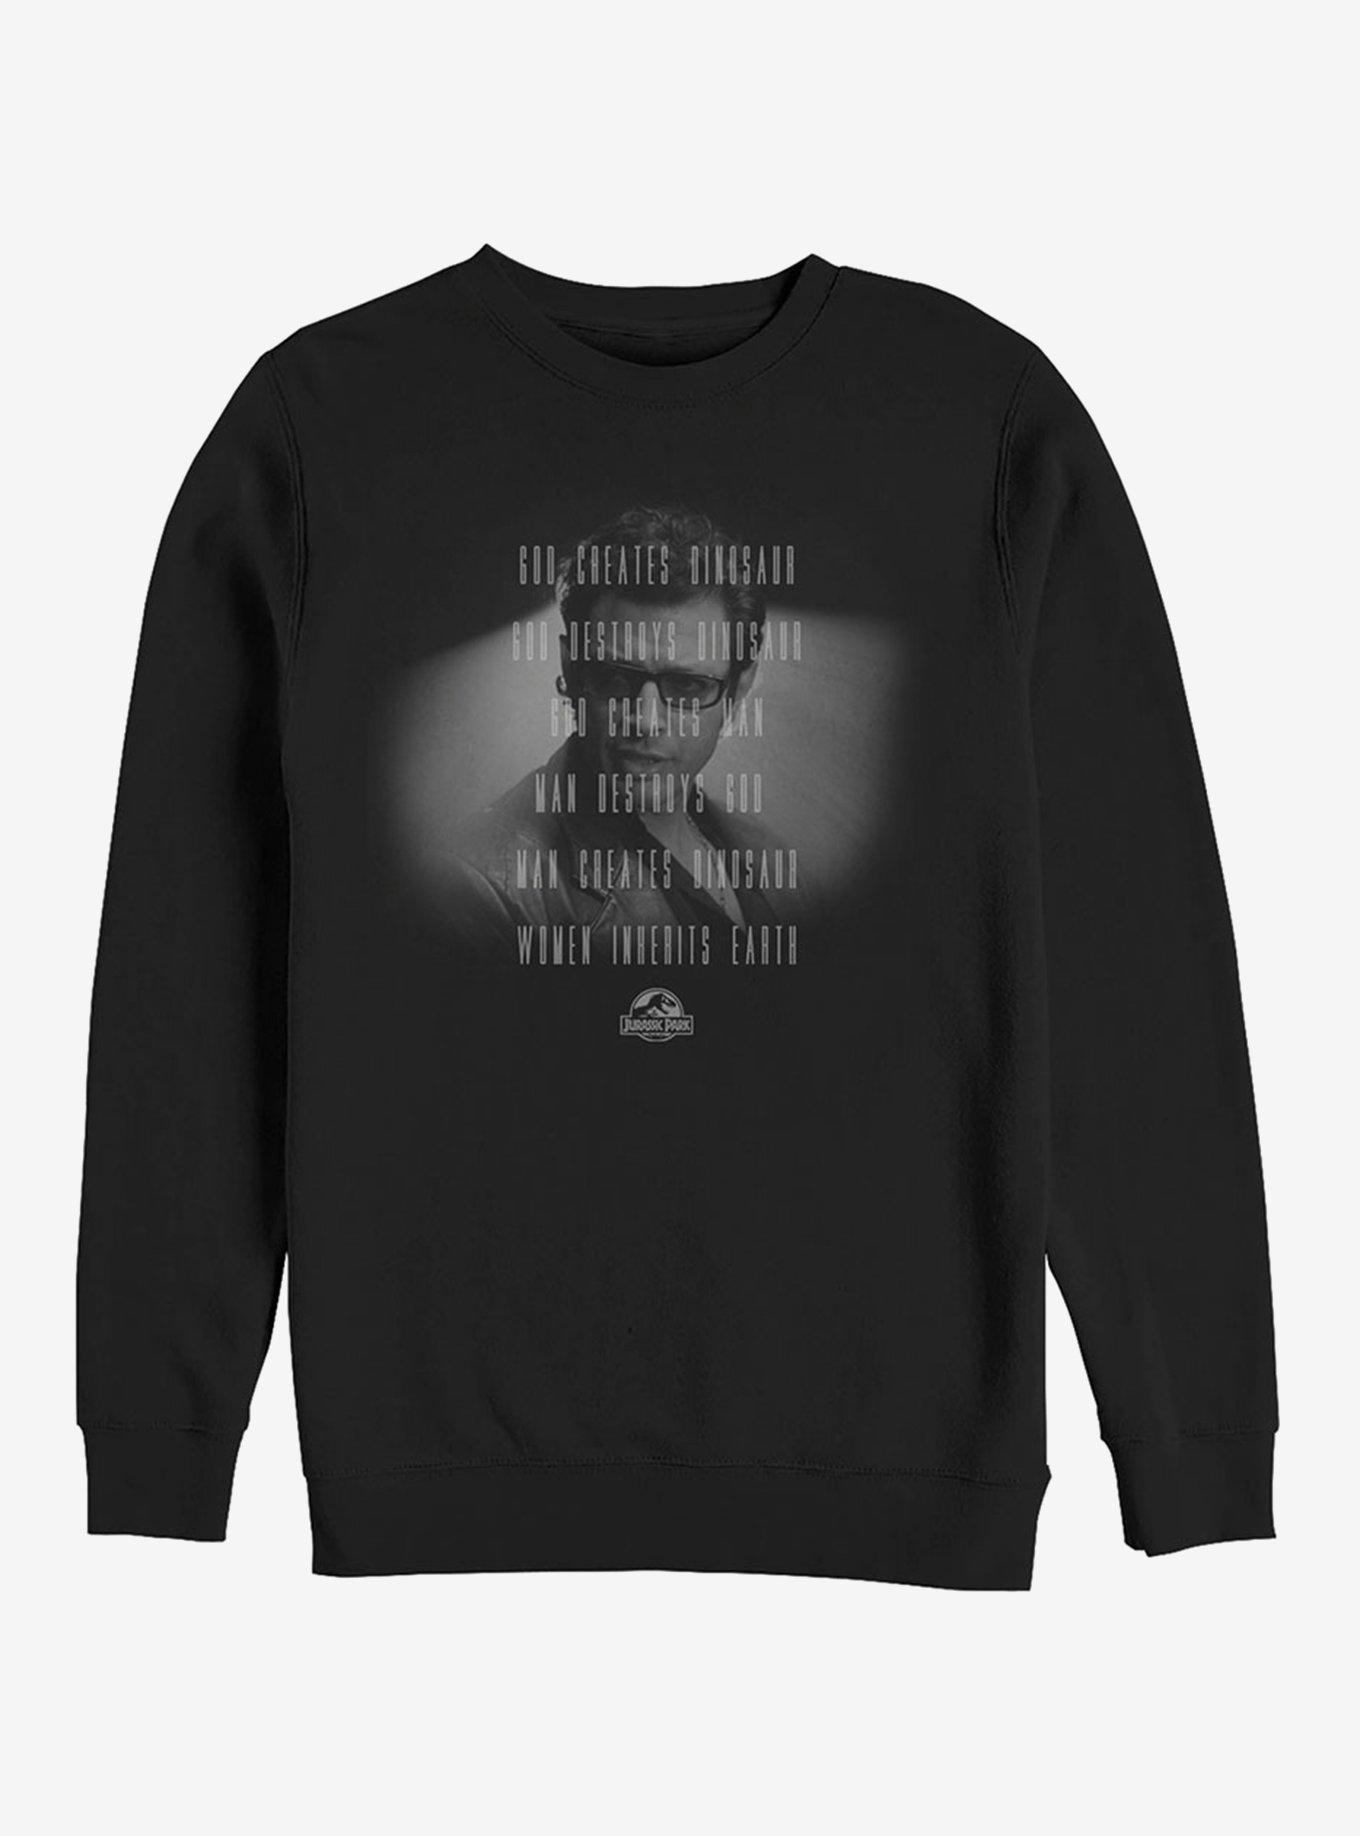 Dr. Malcolm Man Creates Dinosaur Sweatshirt - BLACK | Hot Topic